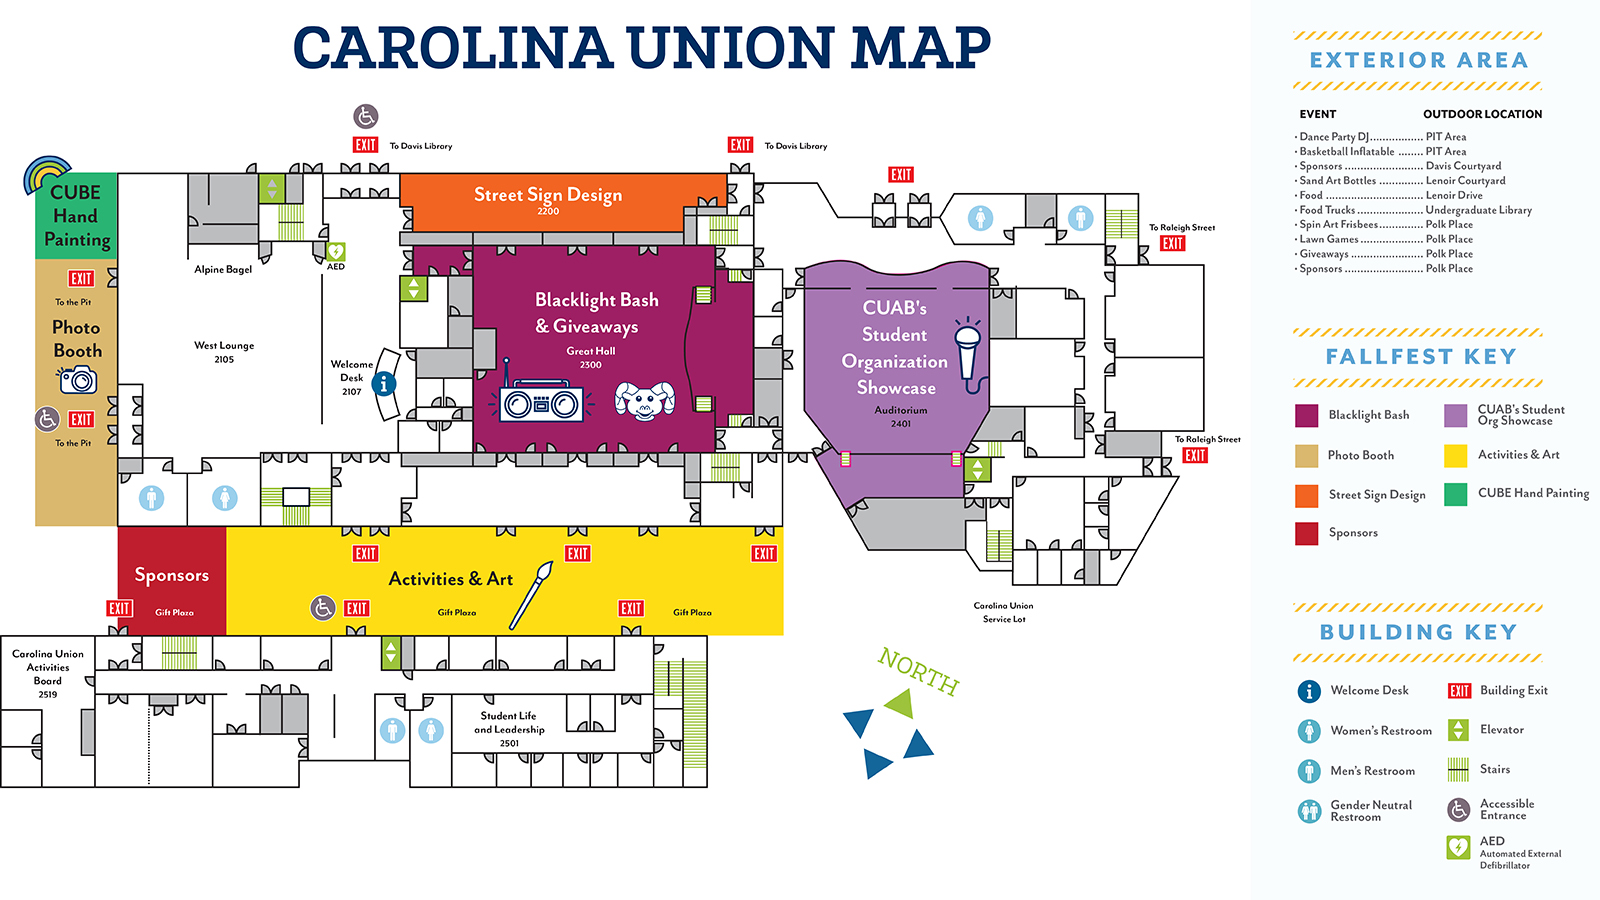 Graphic image map of the Carolina Union's Fallfest footprint.